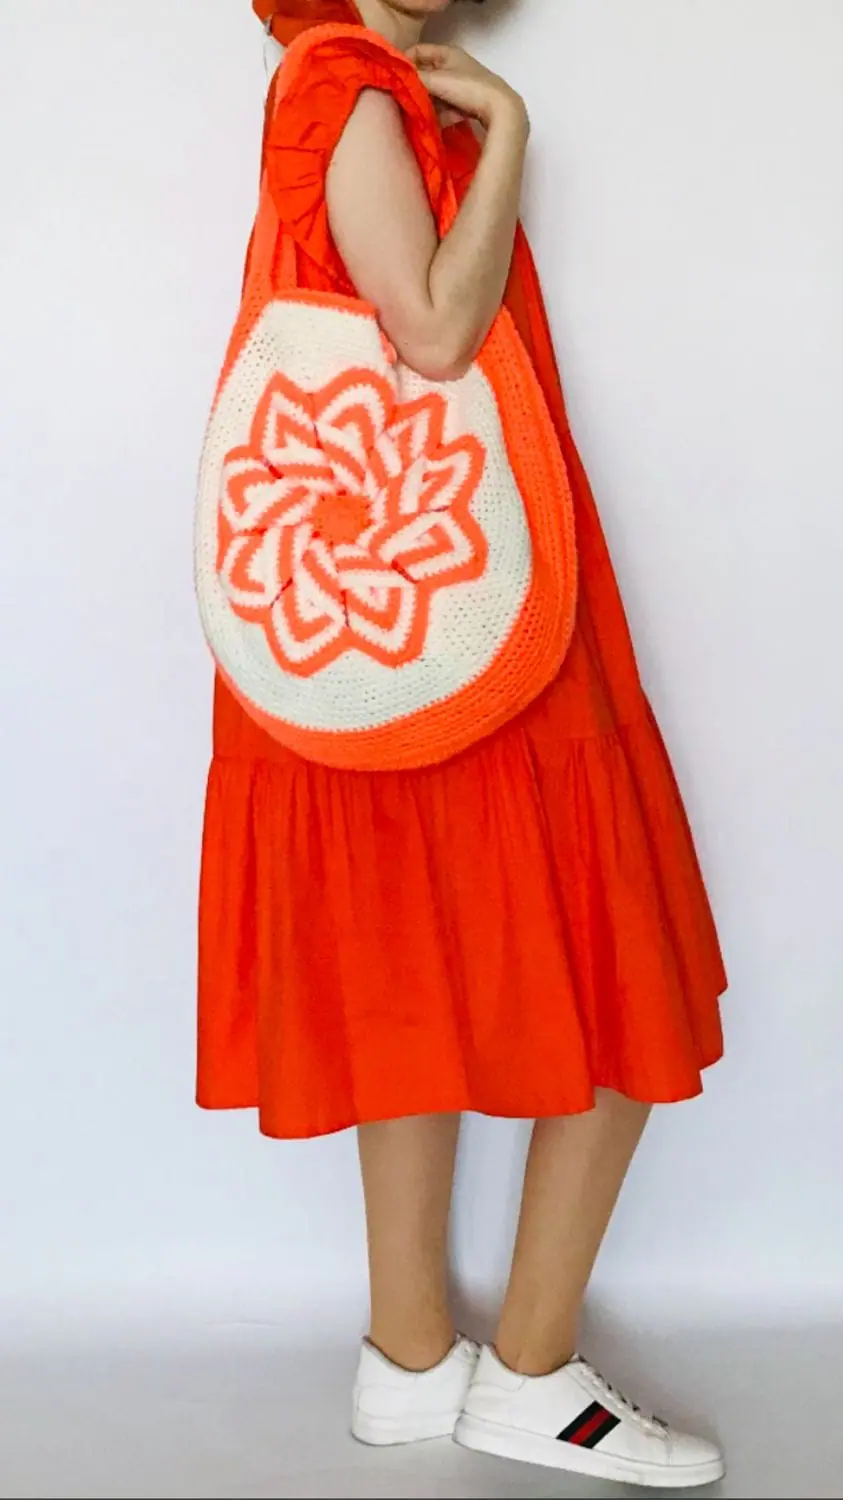 Knitted shopper bag made of Orange yarn